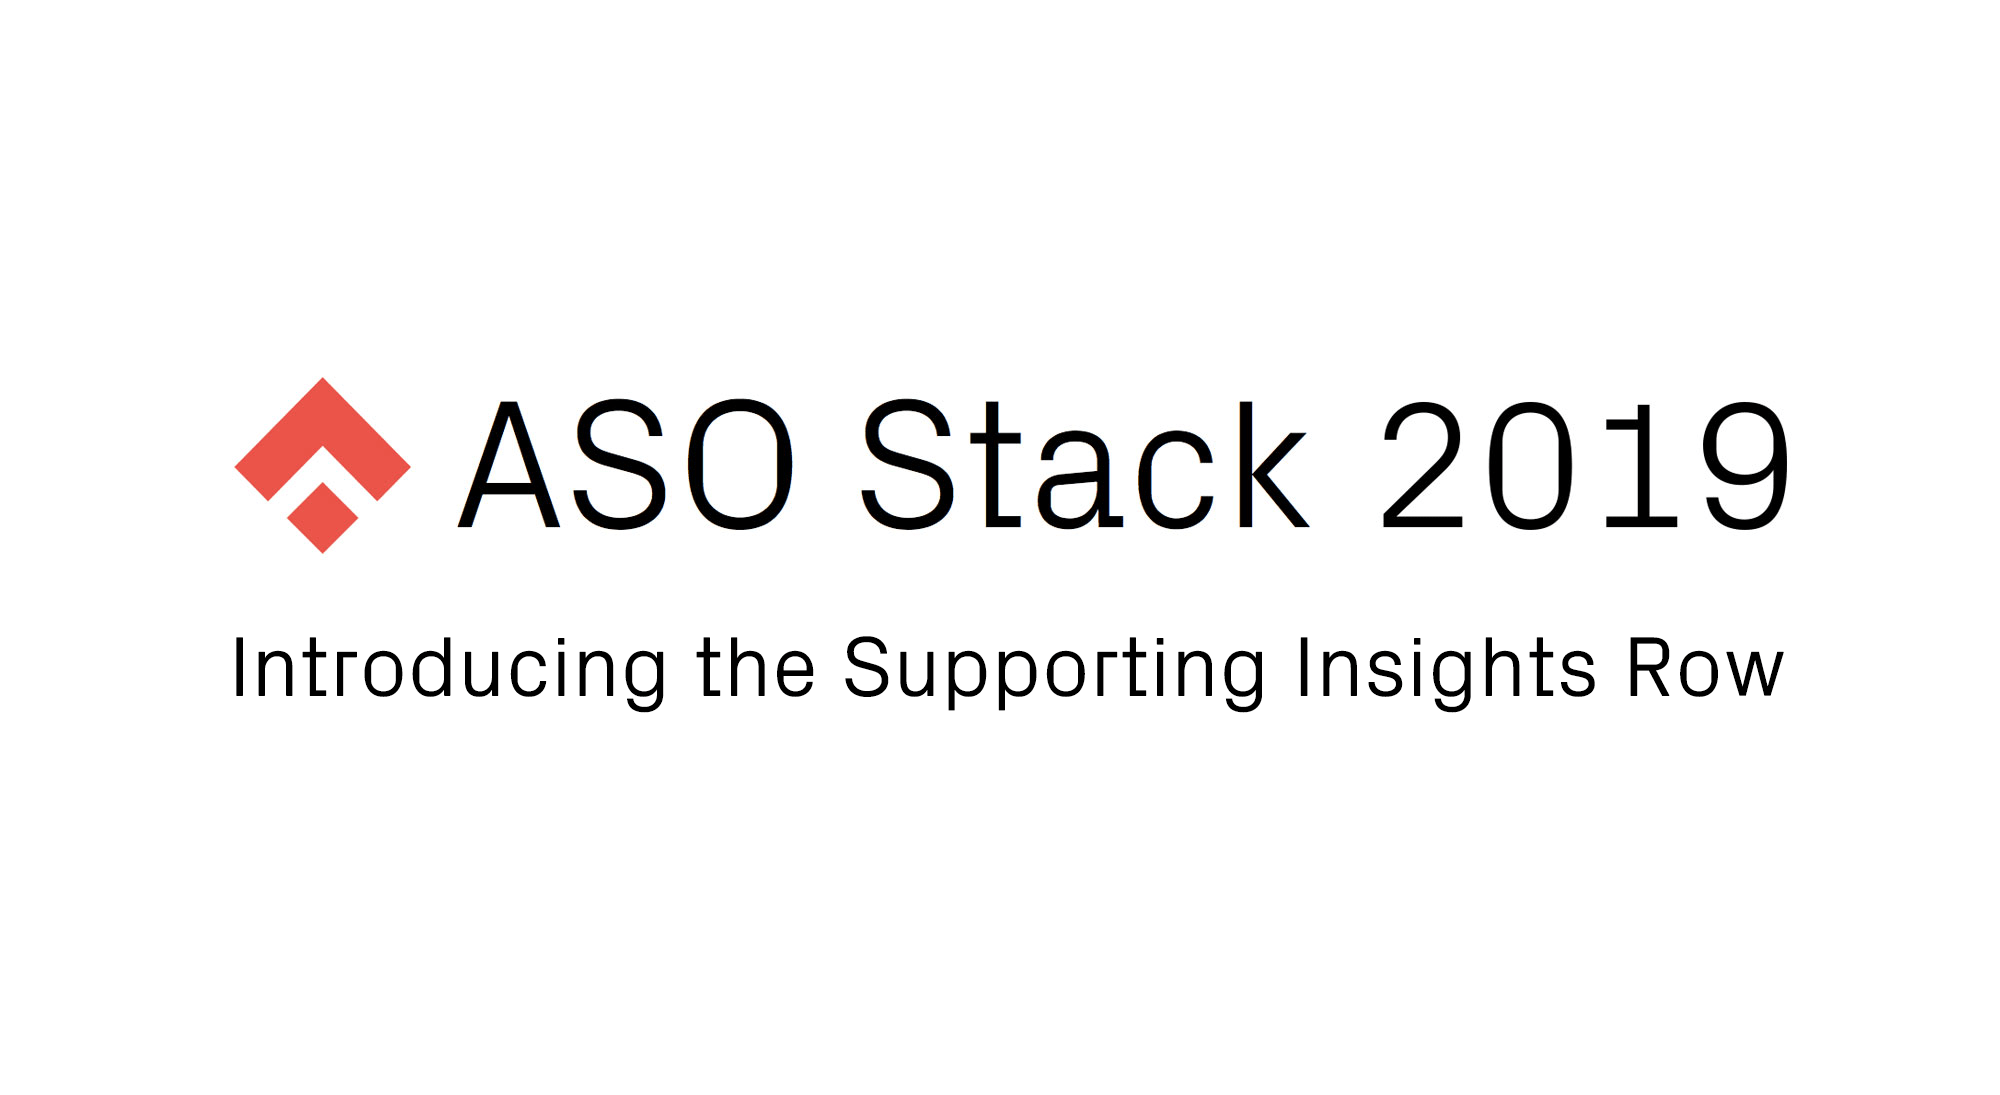 ASO stack 2019